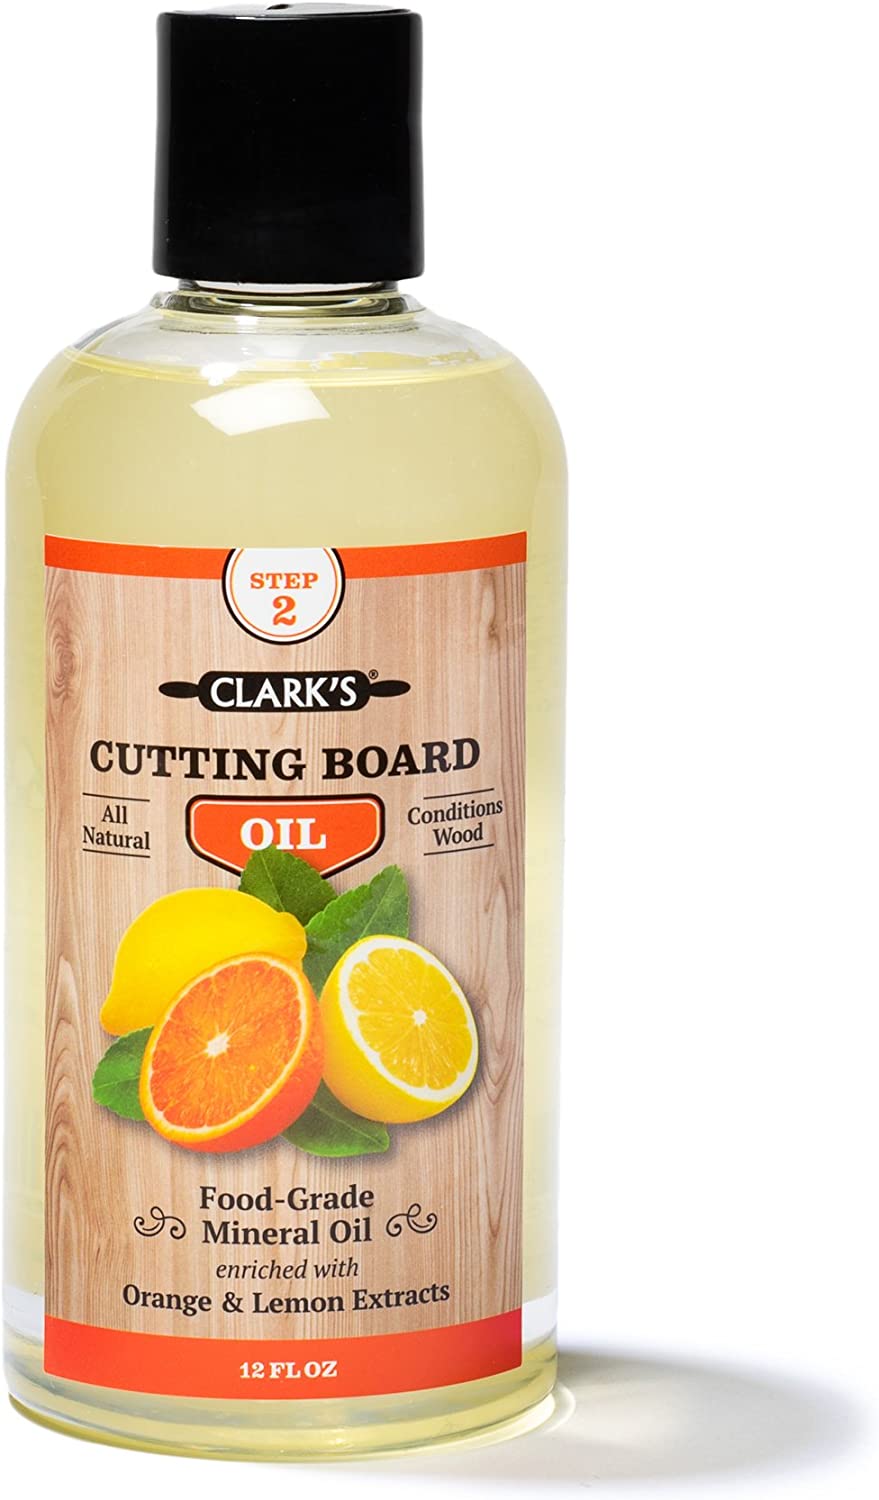 CLARK’S All Natural 3-Step Cutting Board Oil